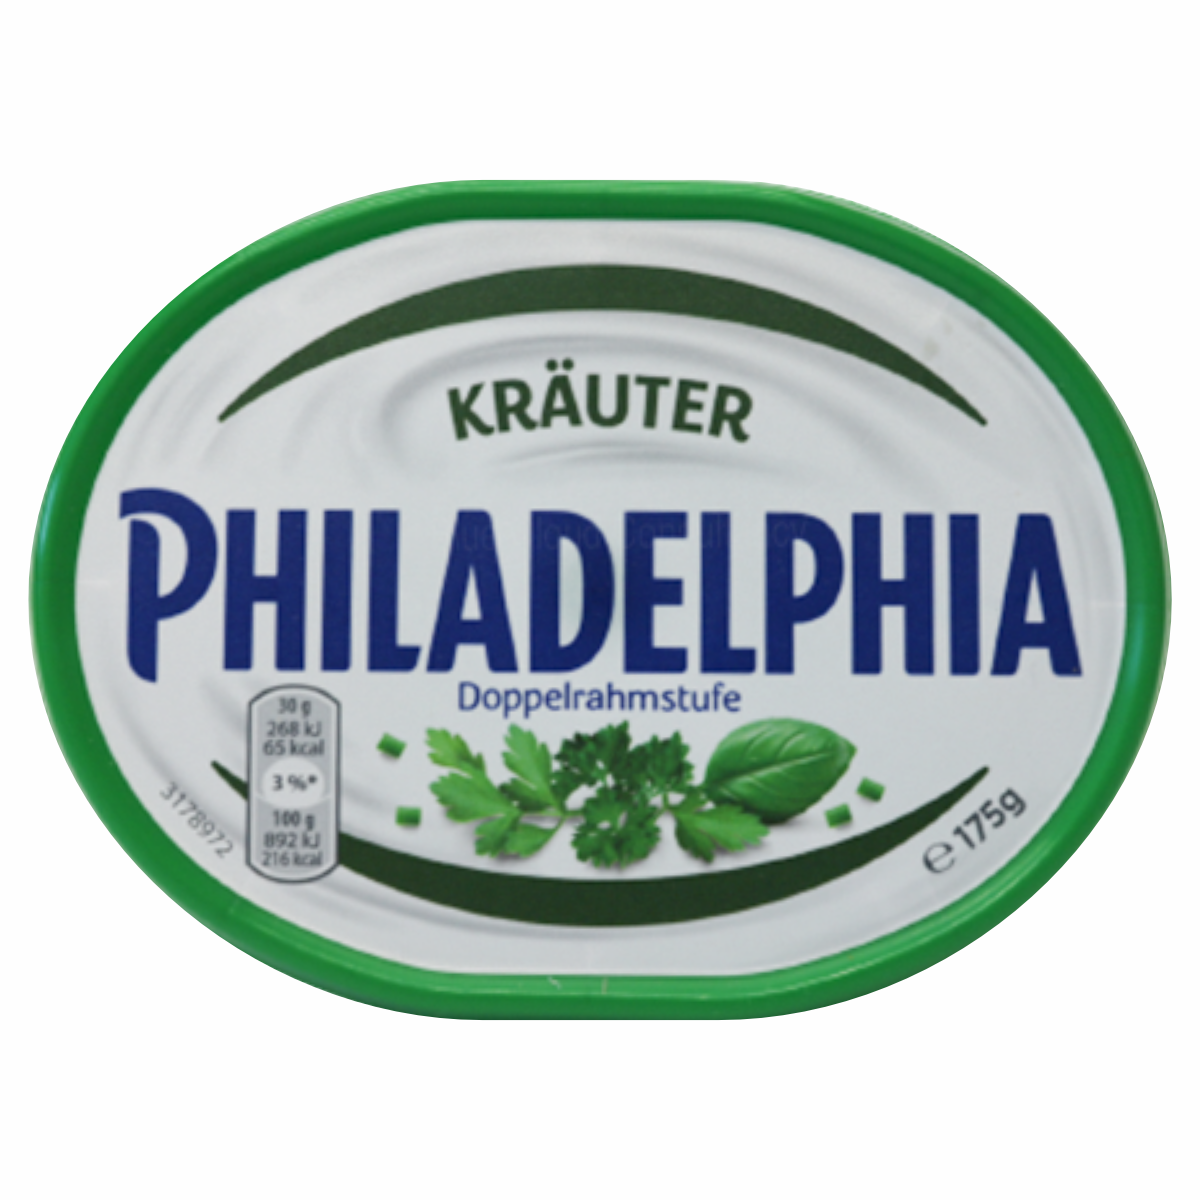 Крем-сир Philadelphia 64% 175г Зелень